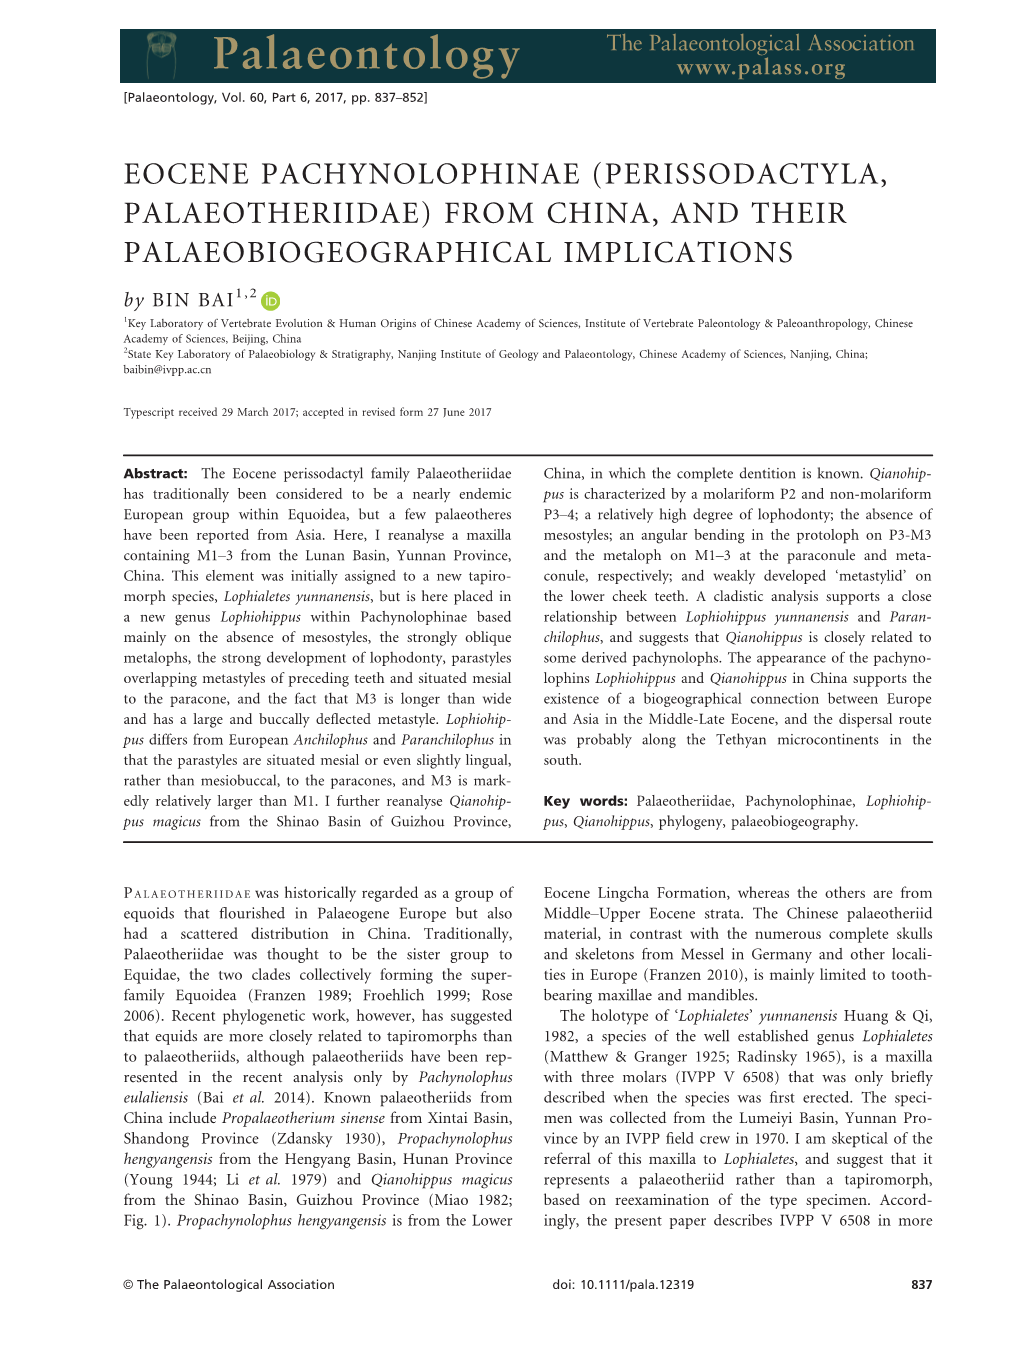 Eocene Pachynolophinae (Perissodactyla, Palaeotheriidae) from China, and Their Palaeobiogeographical Implications